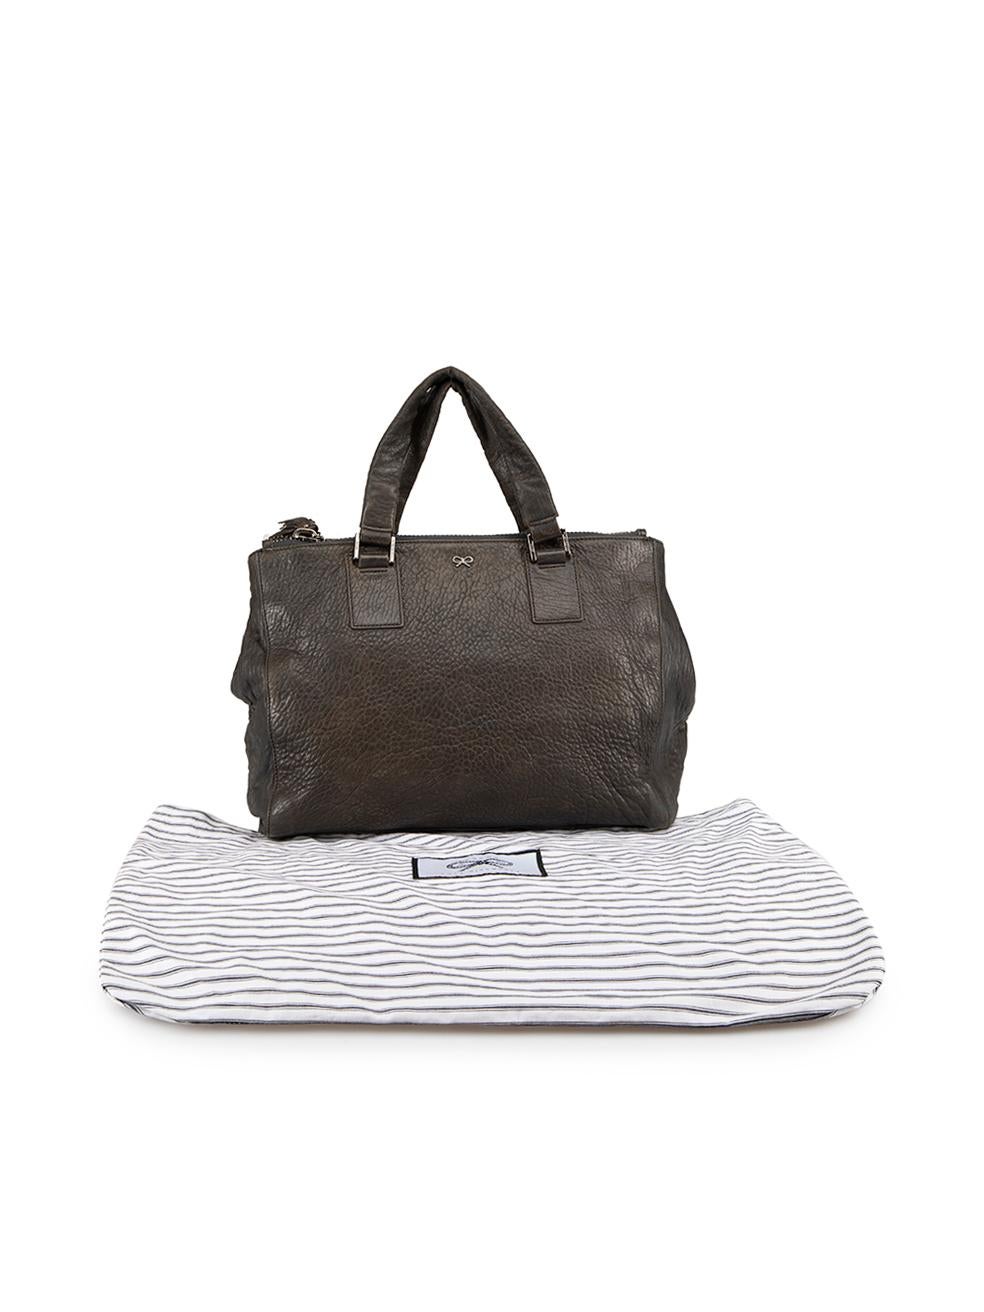 Anya Hindmarch Dark Grey Leather Textured Handbag For Sale 3